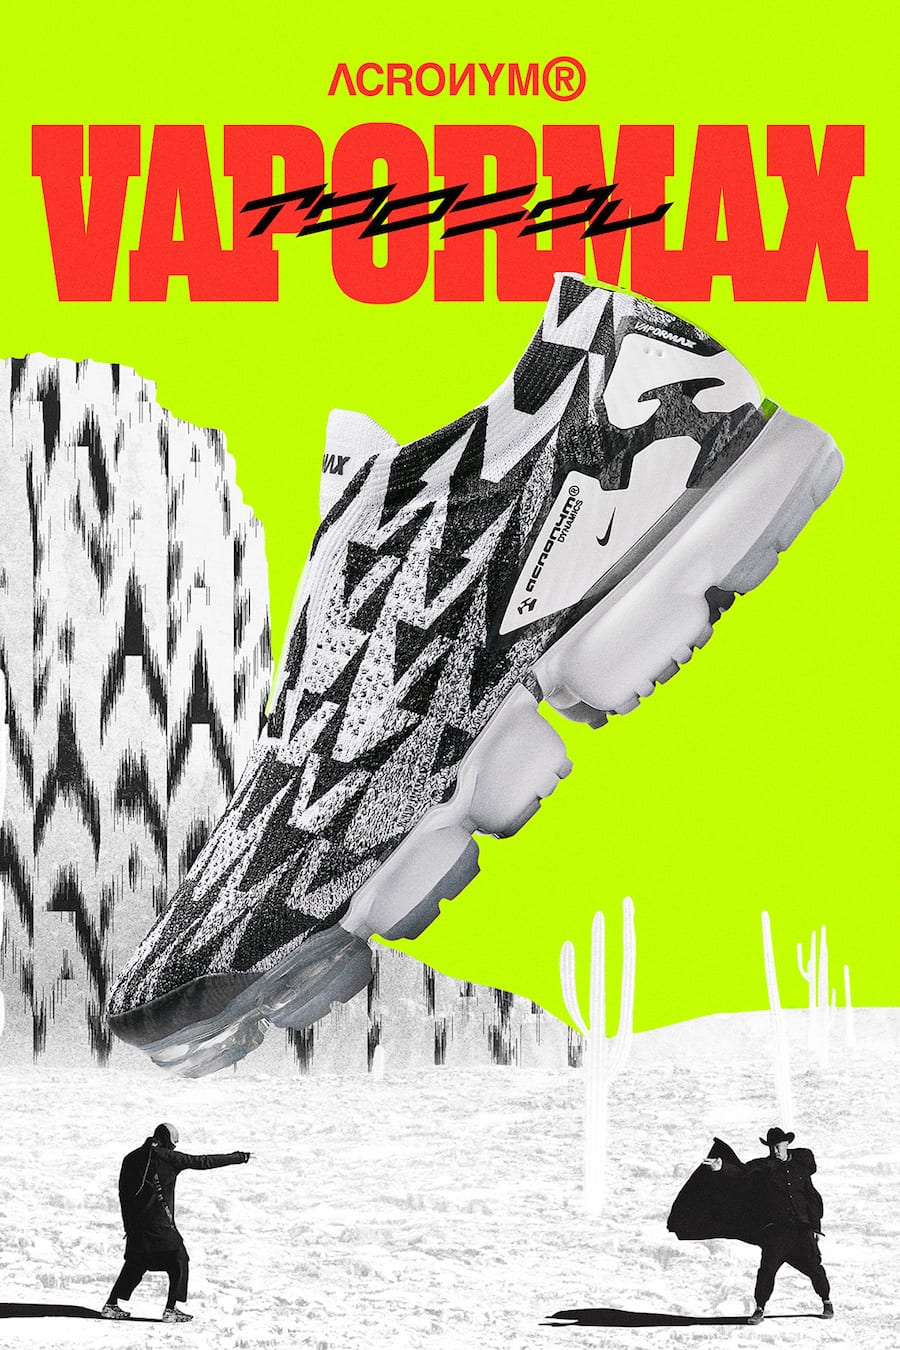 Acronym x Nike VaporMax Moc 2 Light Bone Volt Light Bone Black AQ0996-001 1